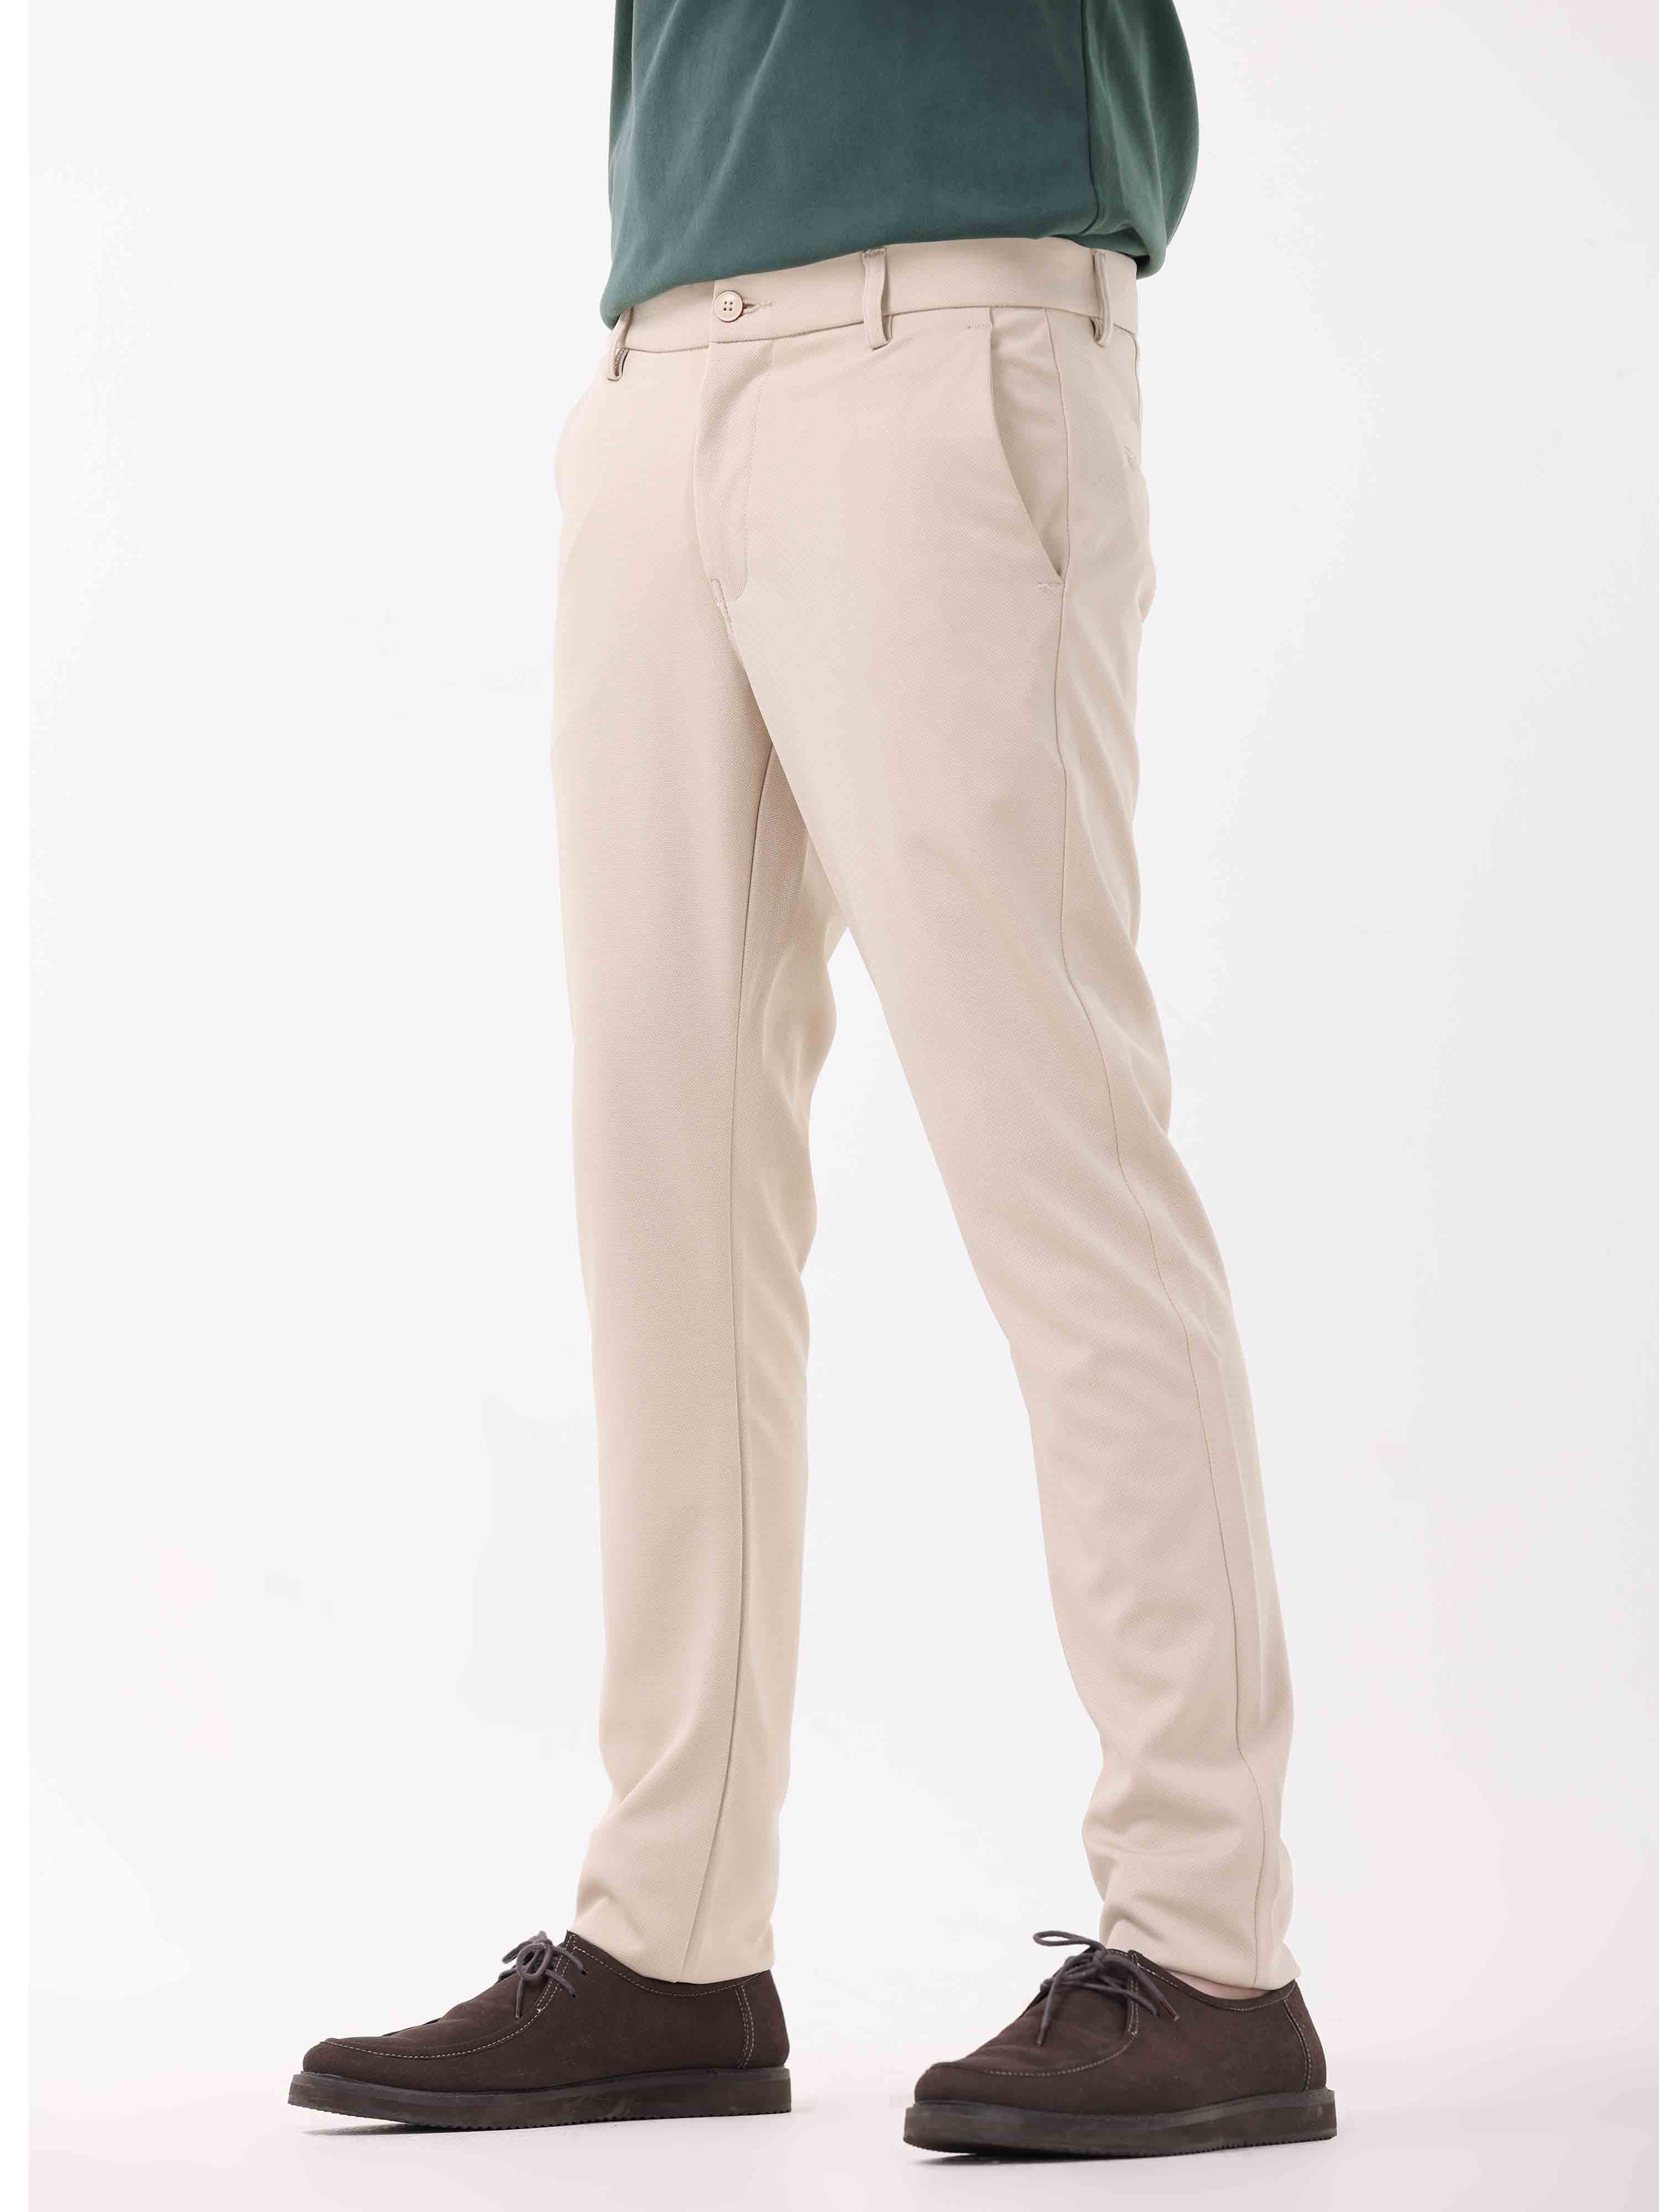 ASOS DESIGN Tall formal wide leg pants in cream | ASOS